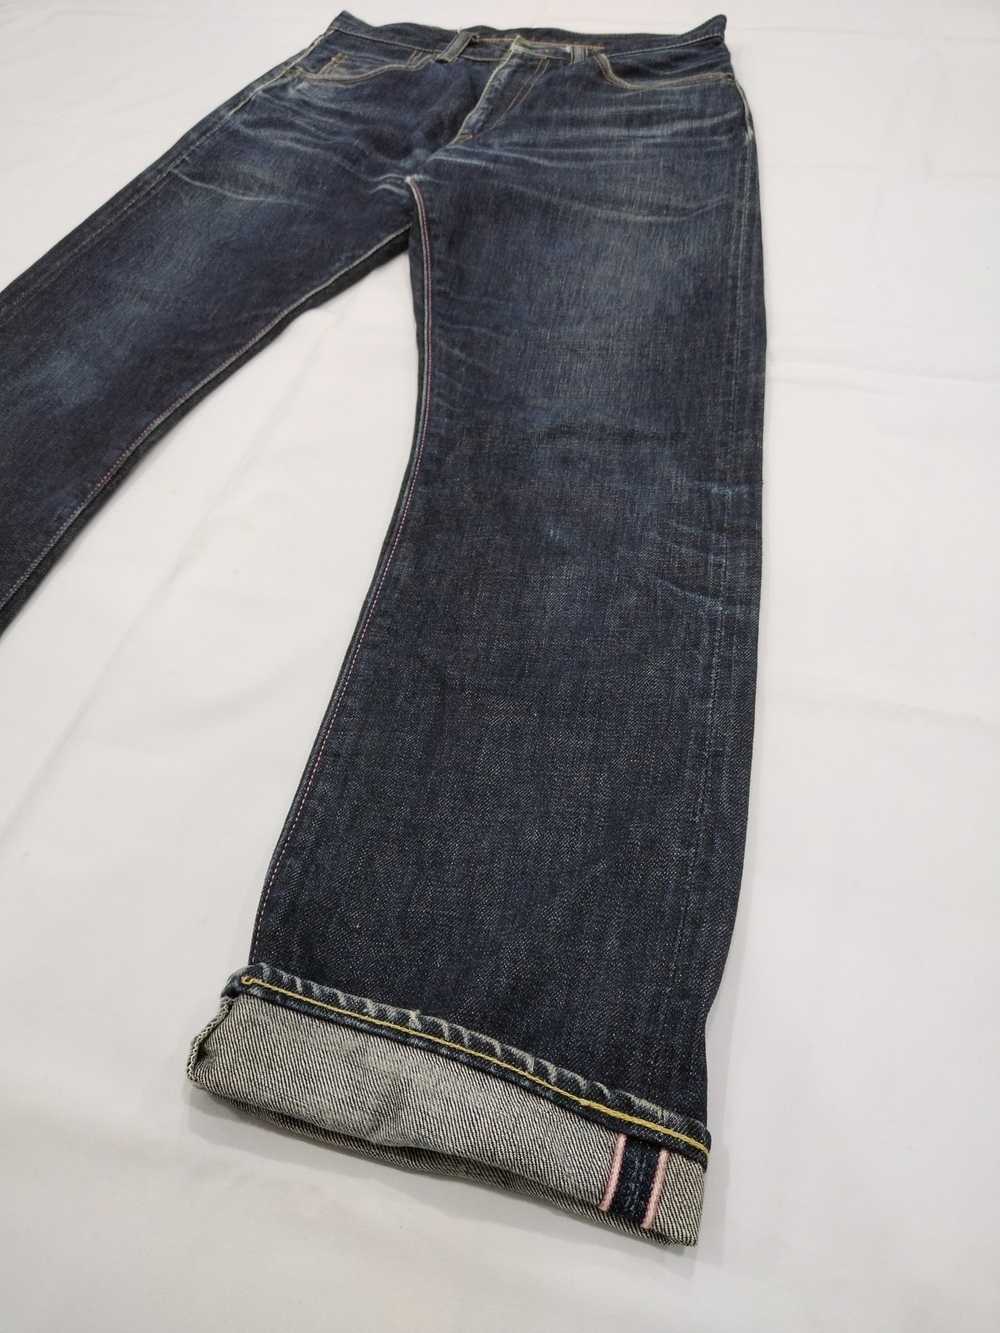 Japanese Brand × Momotaro Momotaro Selvedge Jeans - image 5